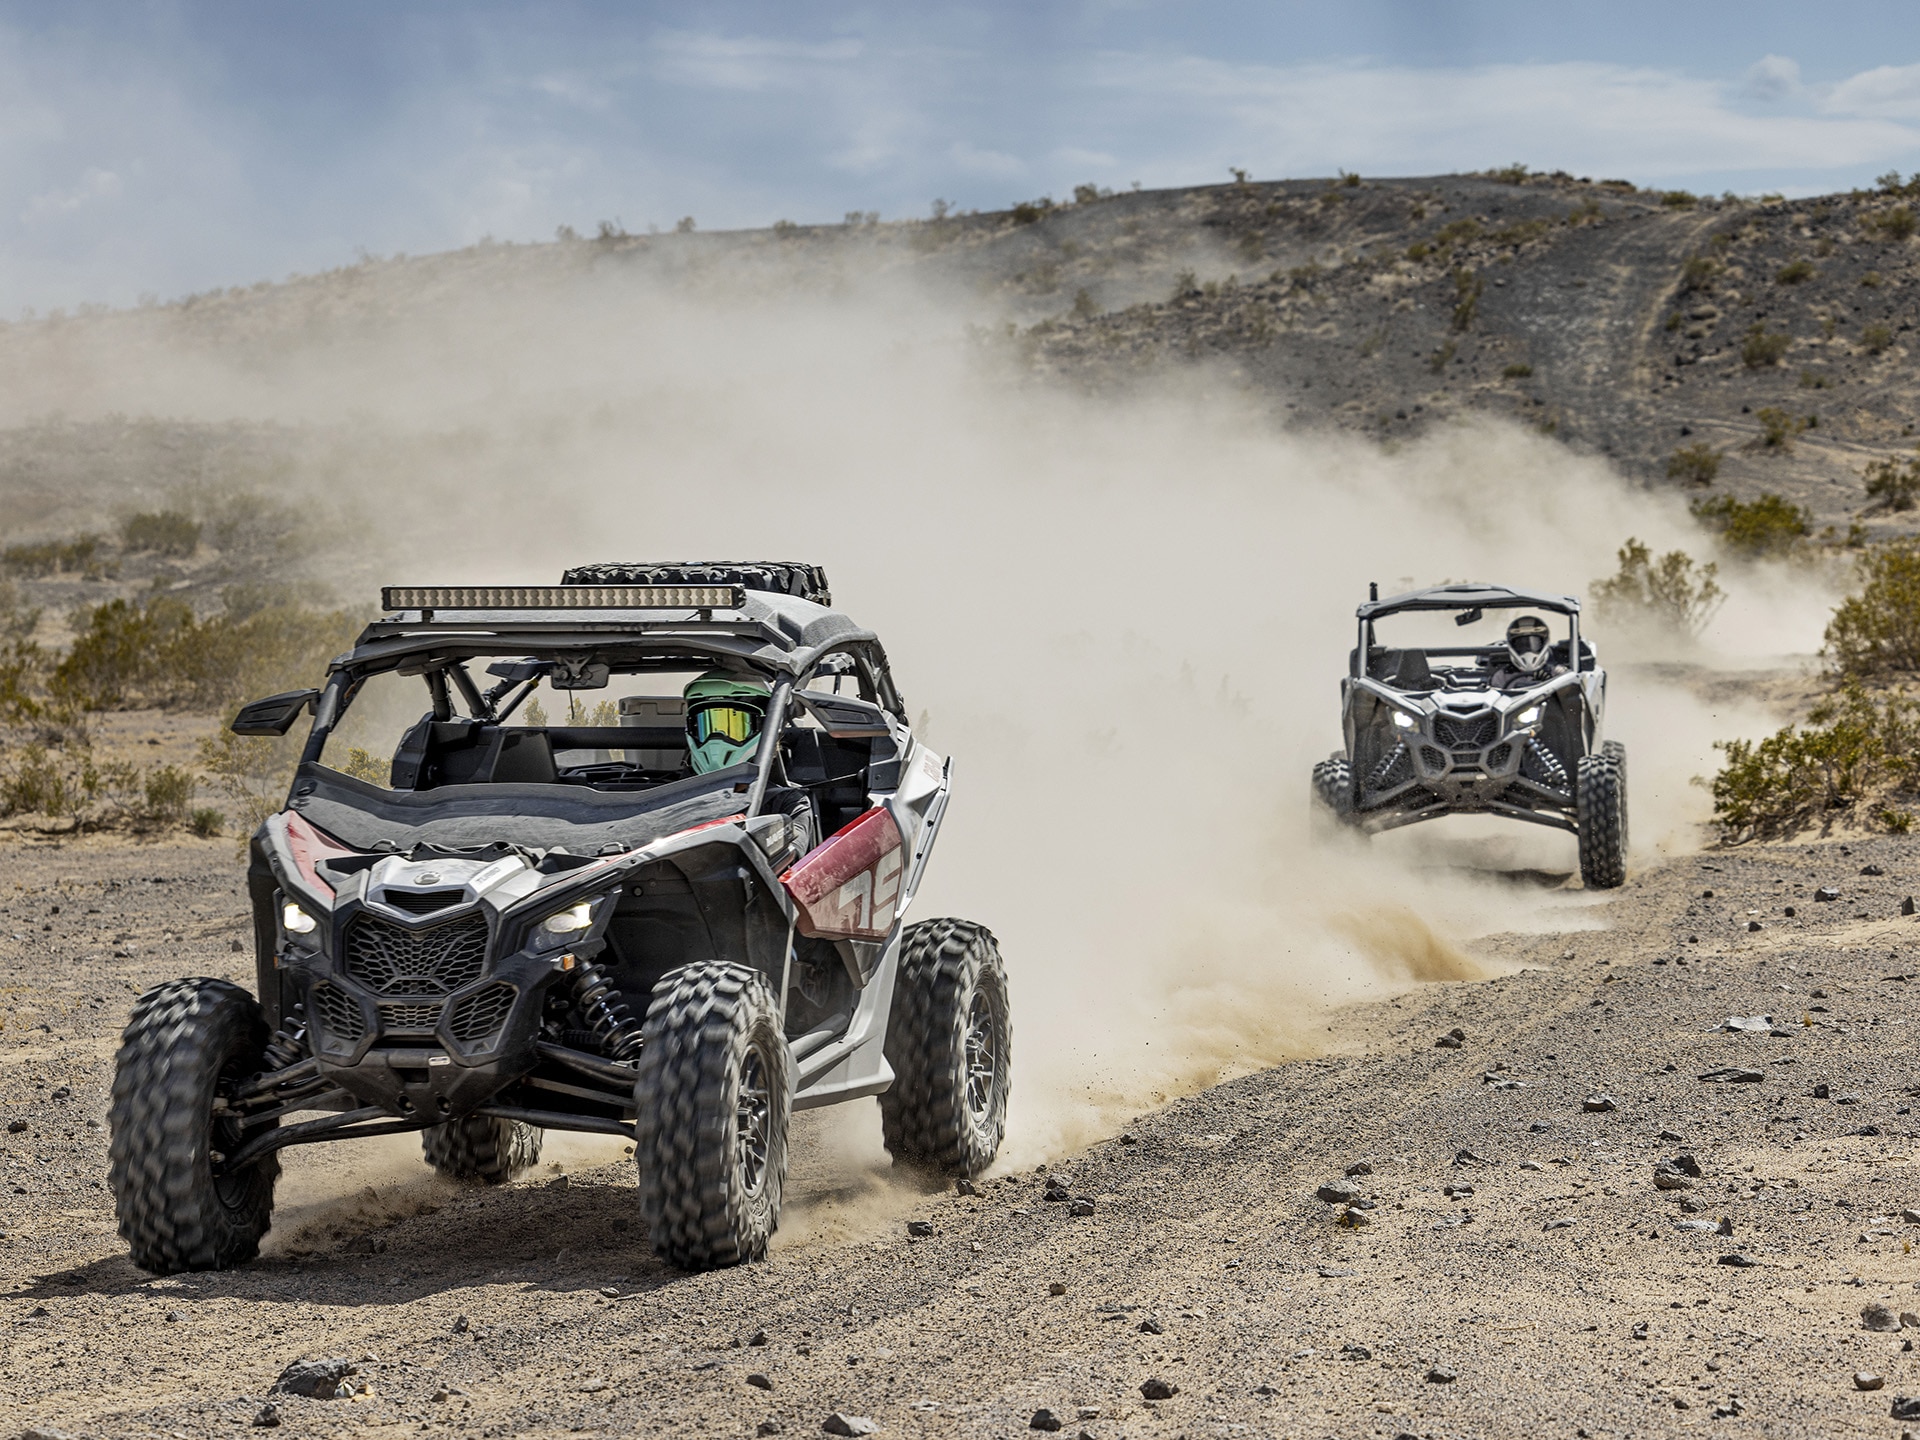 2 Can-Am Maverick vehicles riding on dusty desert trails